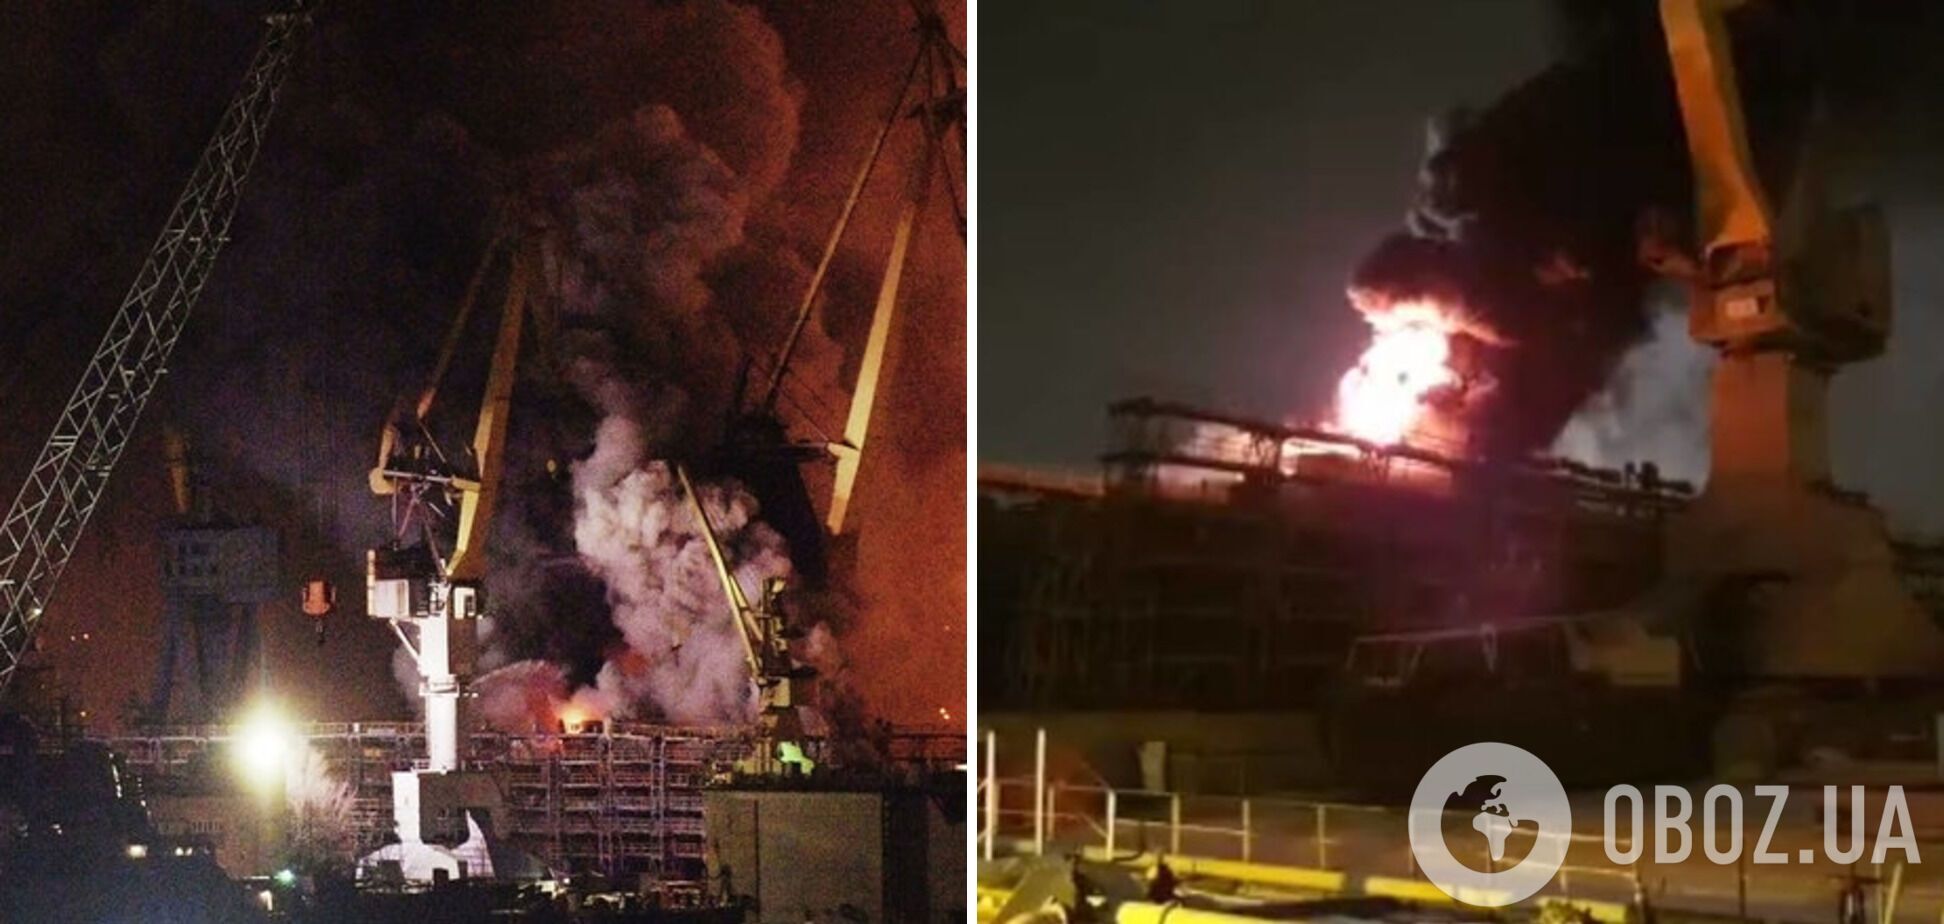 Пожар охватил почти весь корабль.